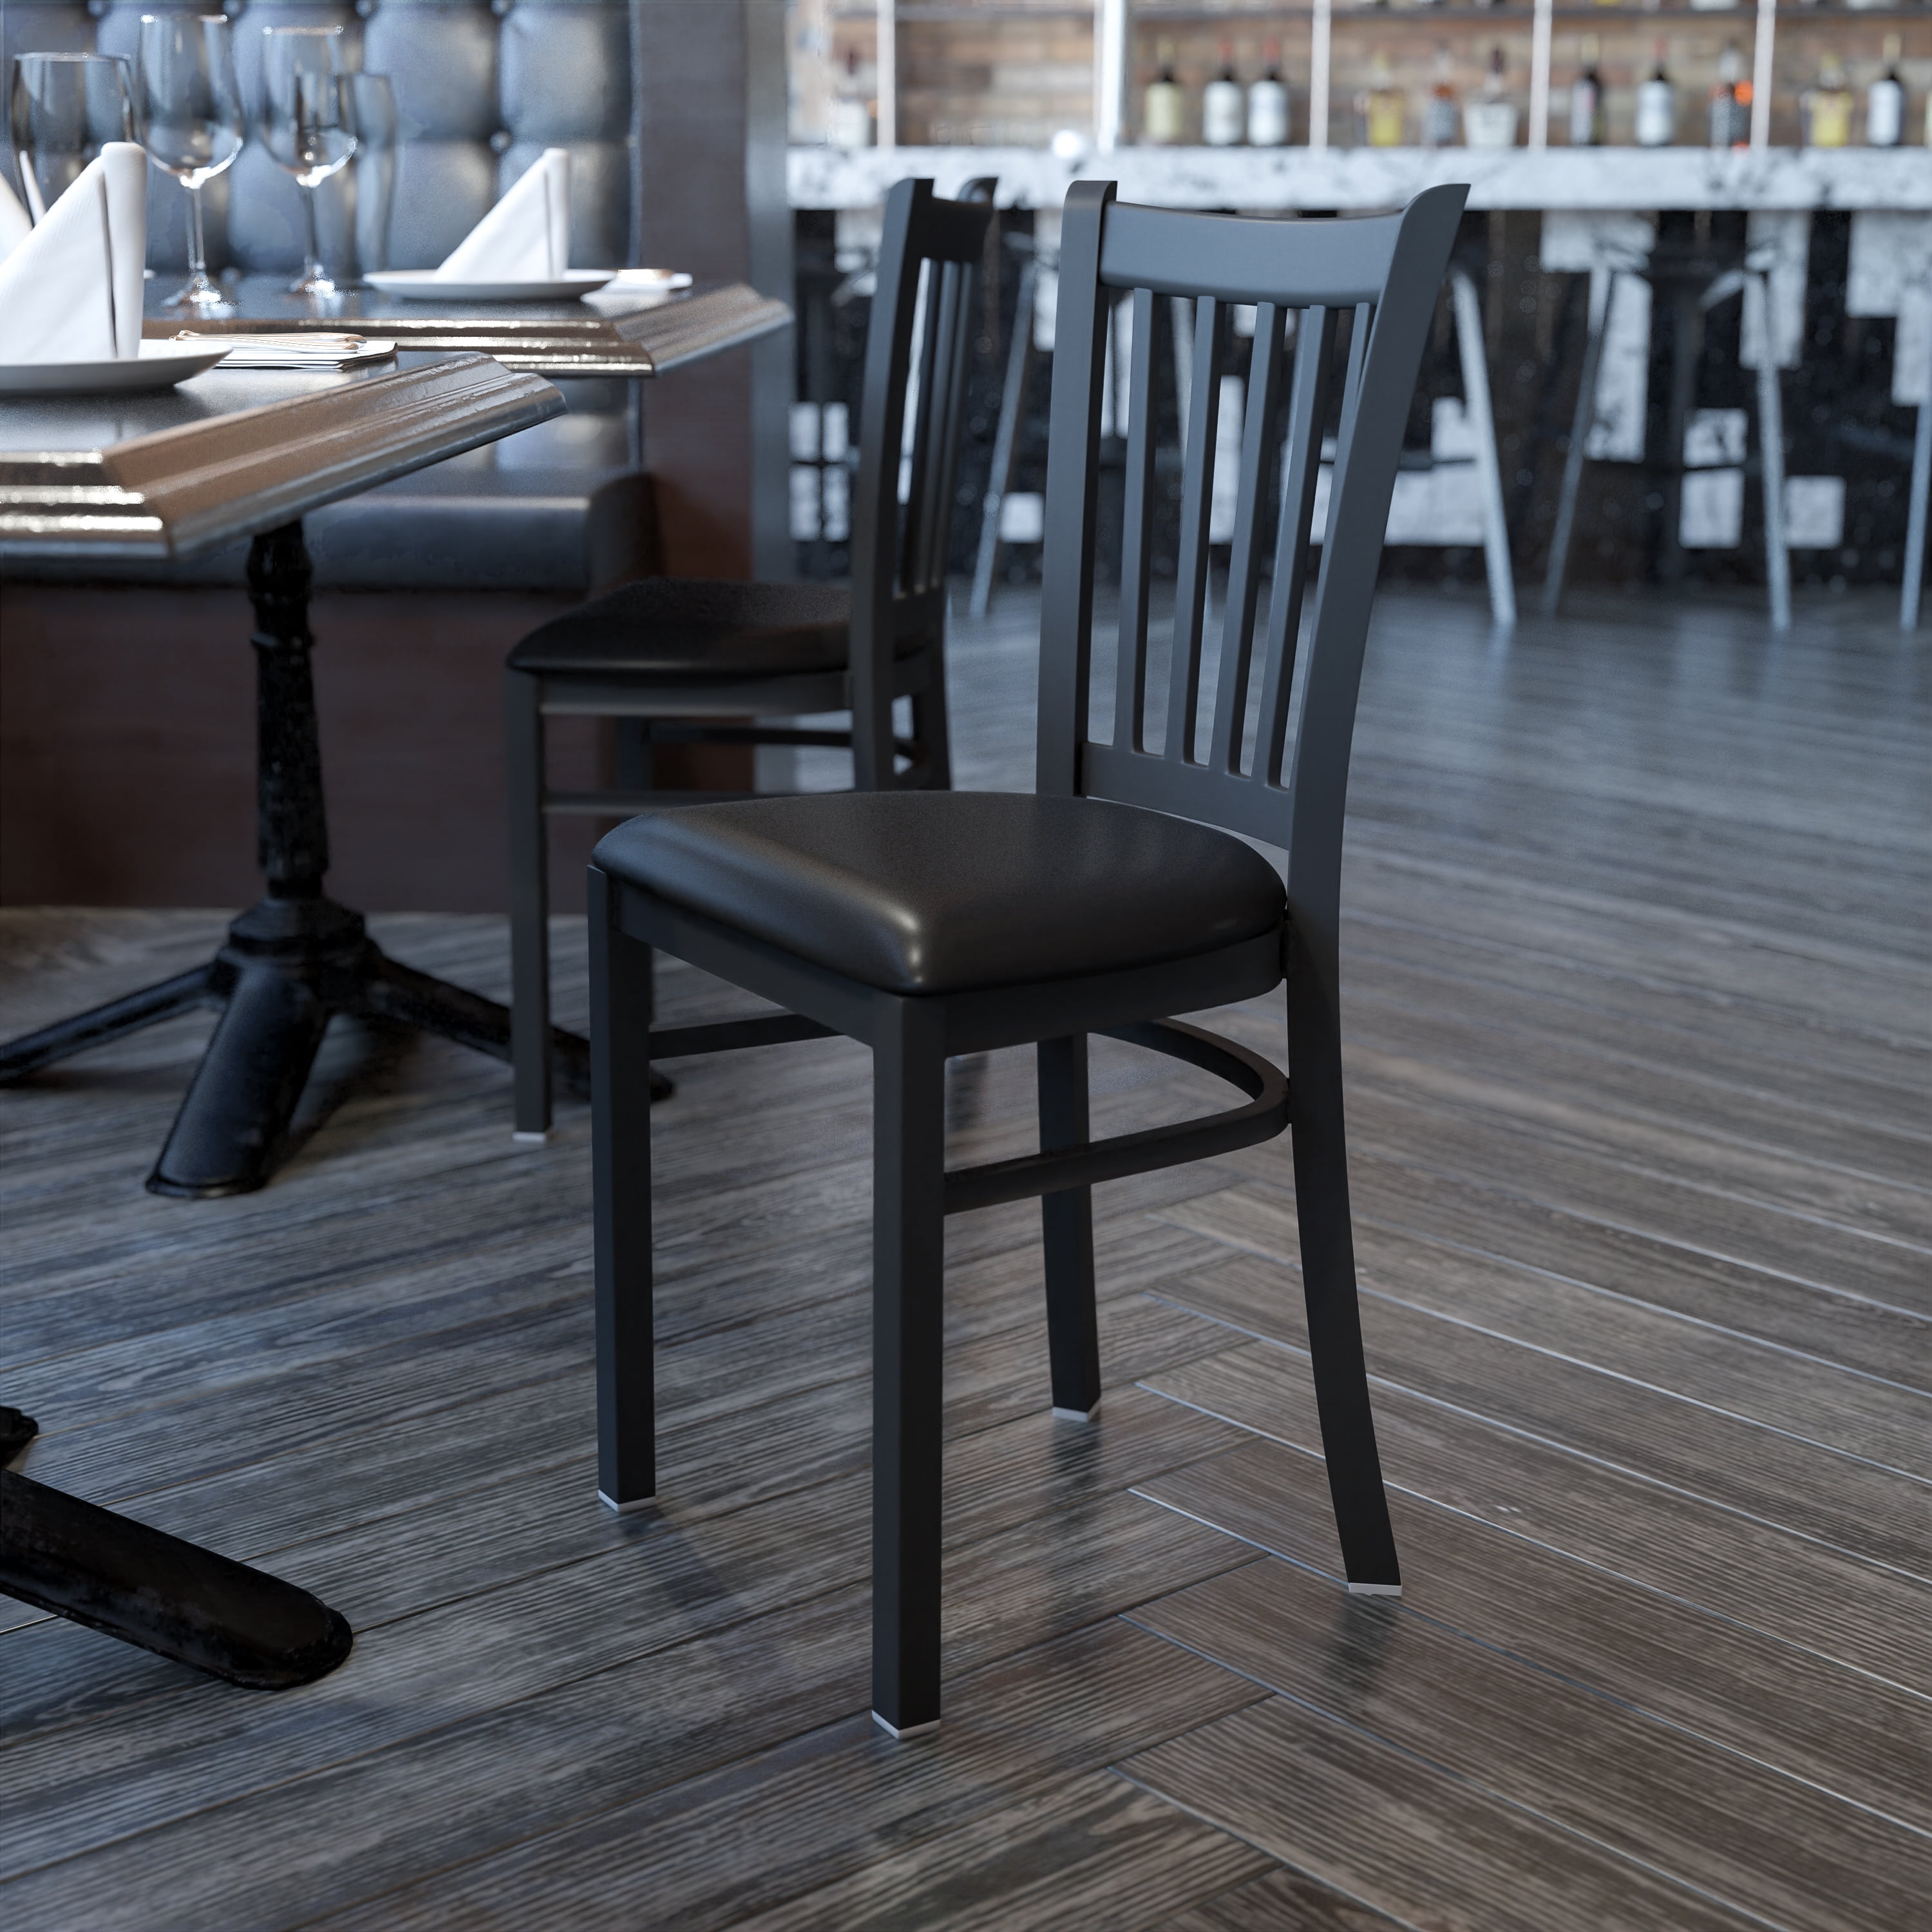 Flash Furniture Hercules Series Black Coffee Back Metal Restaurant Chair for sale online